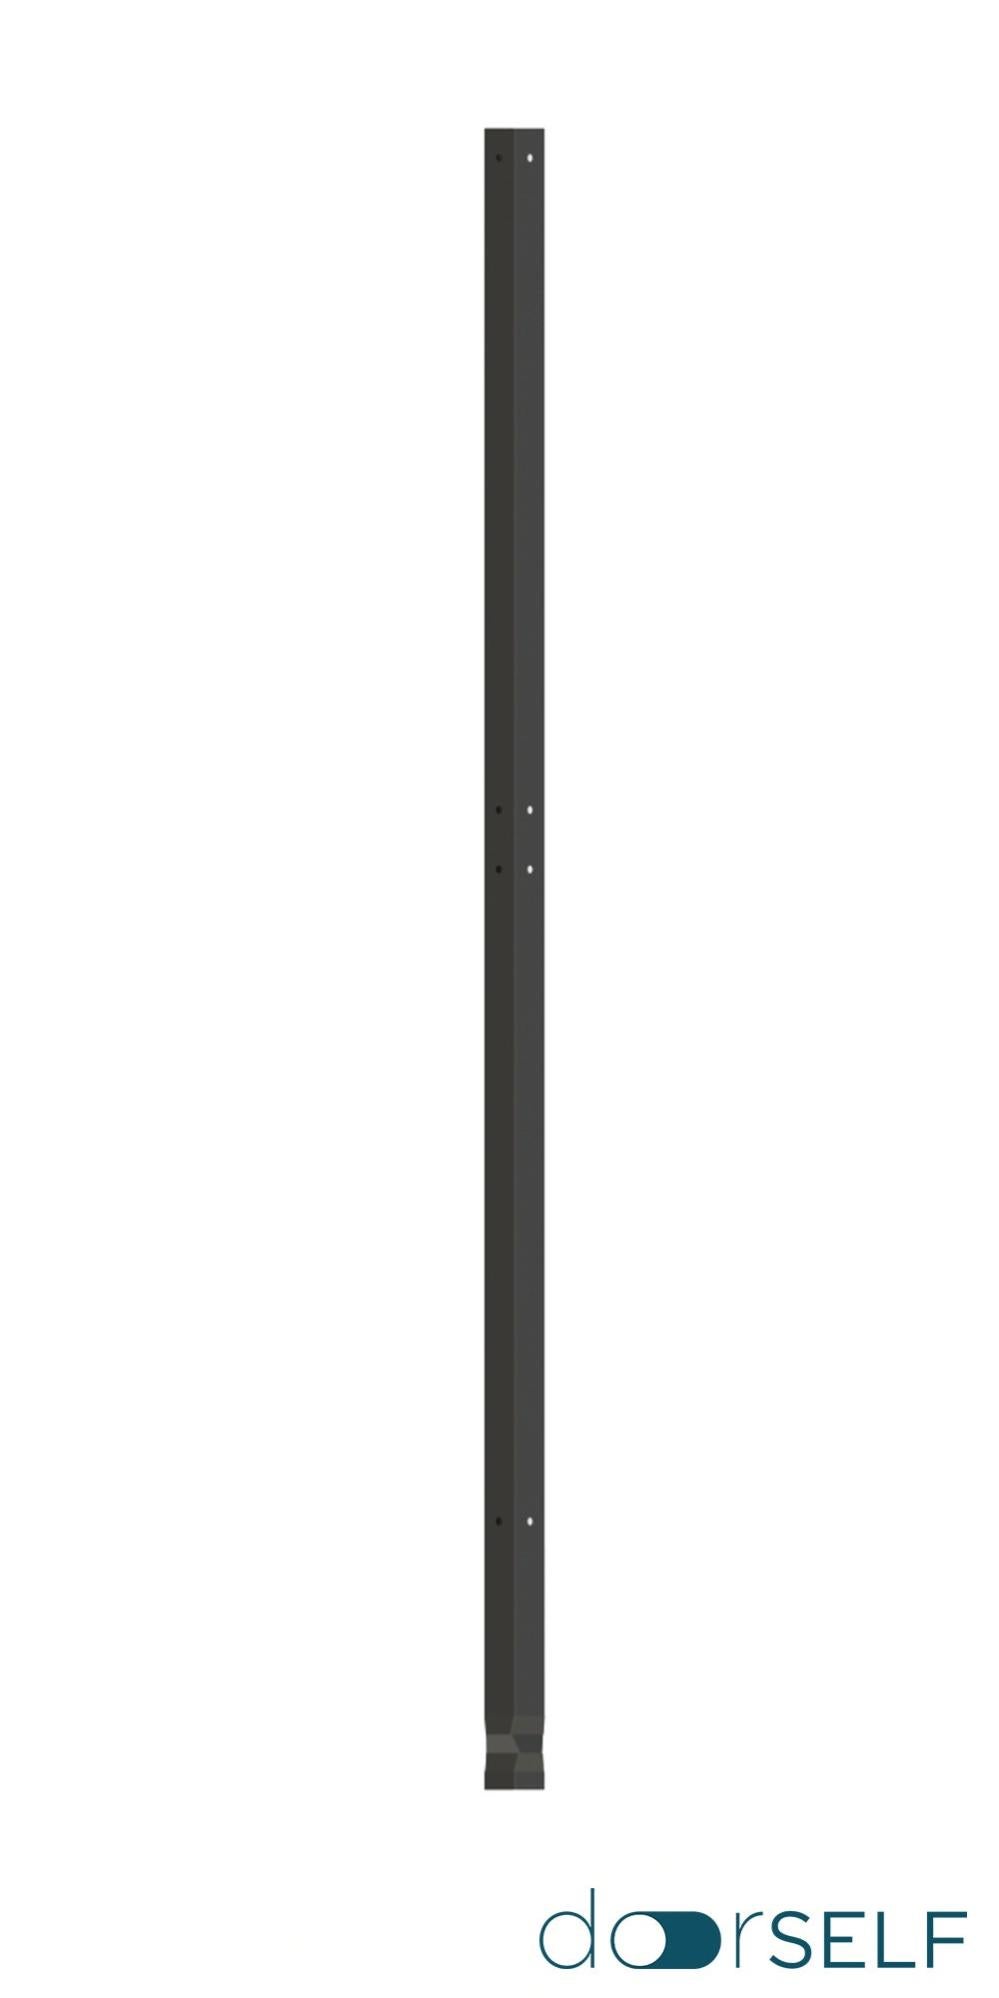 Poste de encastrar para valla de acero gris forja de 6 x 6 x 224.4 cm